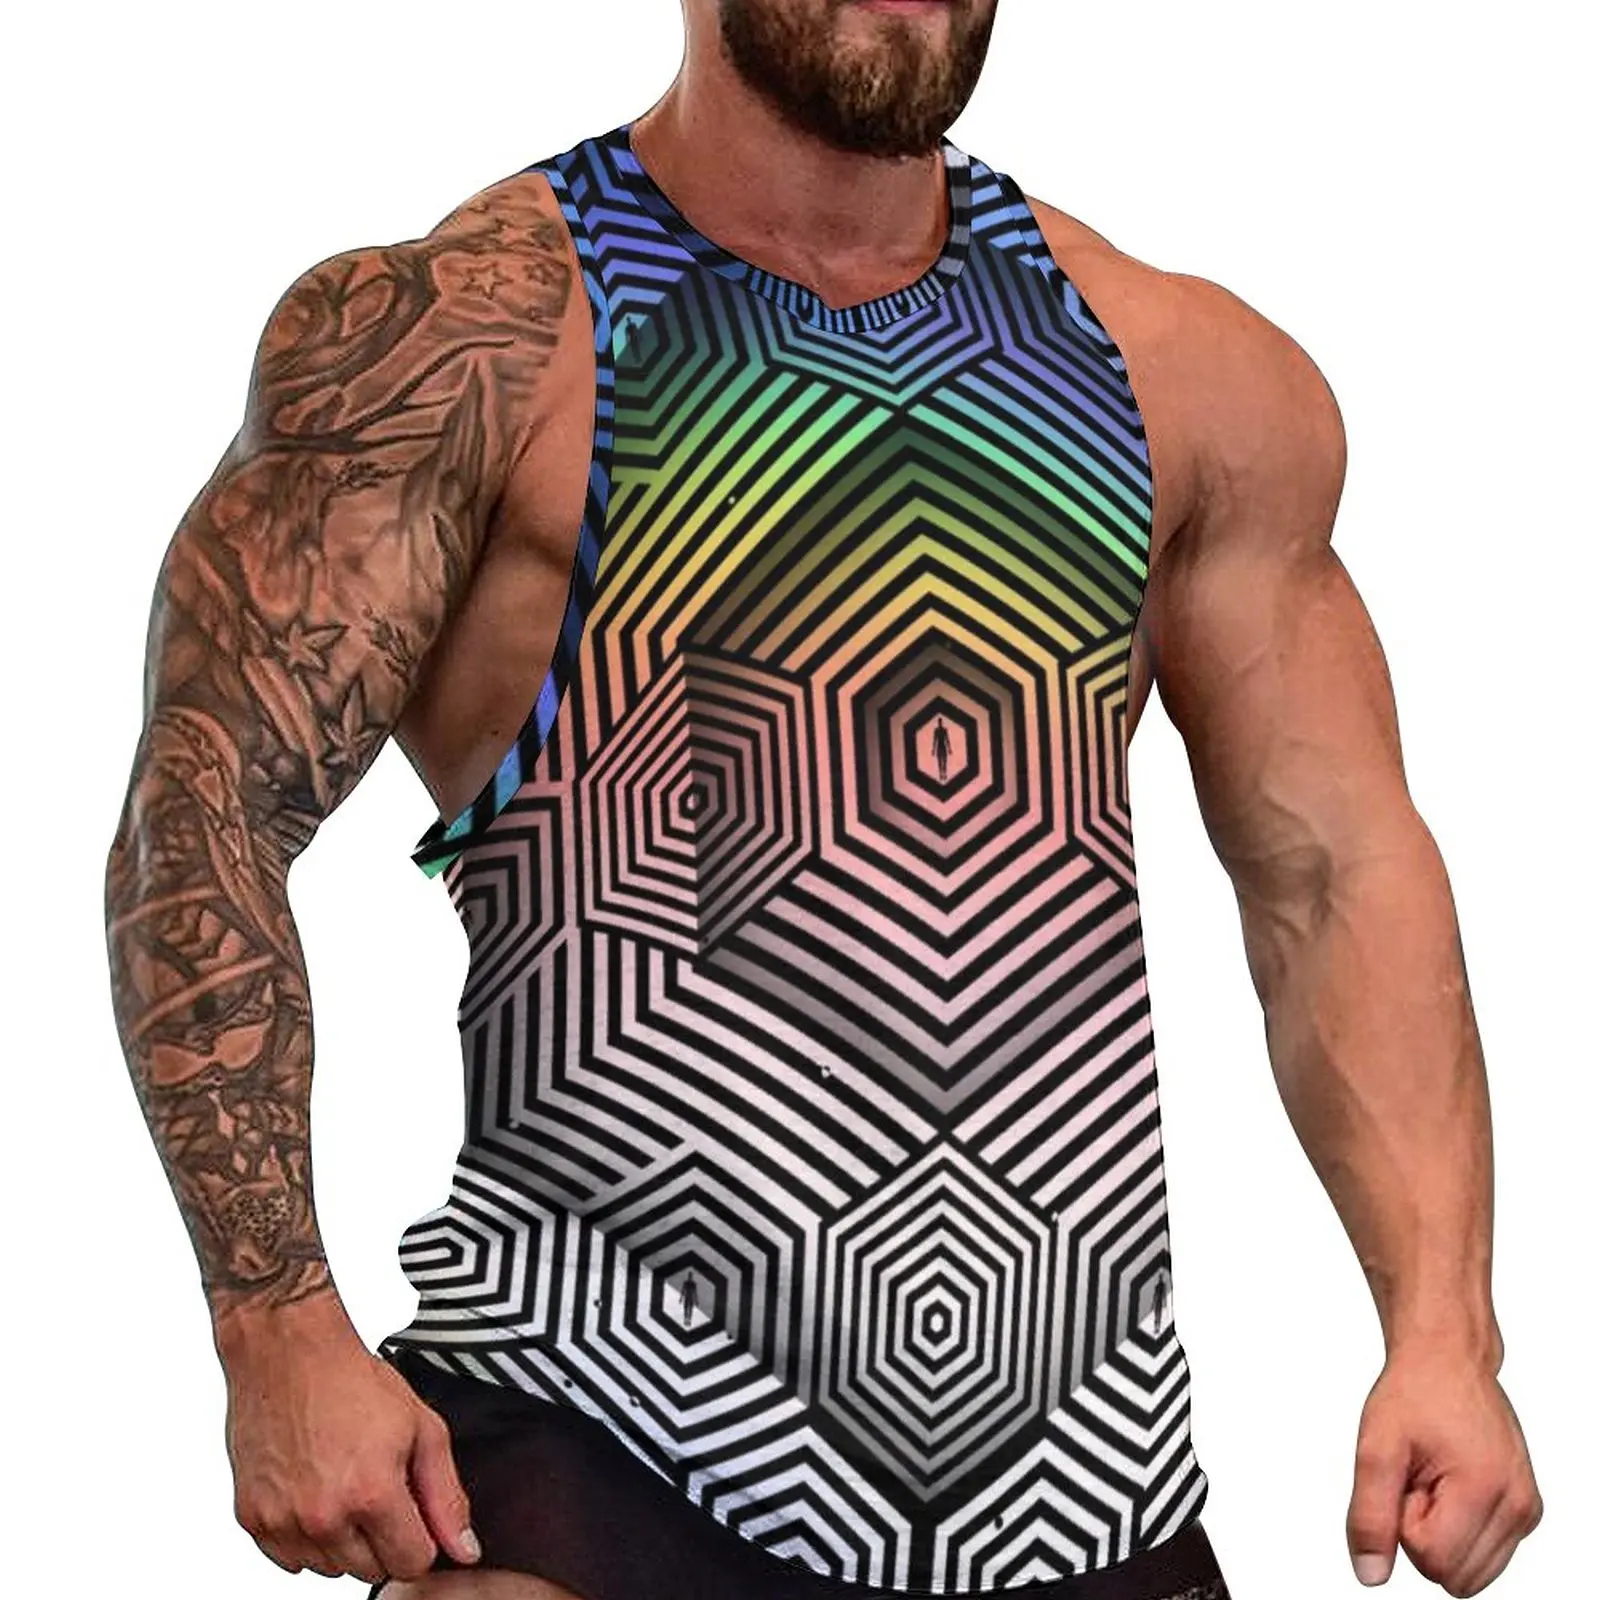 

Ombre Geometry Tank Top Males Optical Art Trendy Tops Beach Bodybuilding Custom Sleeveless Shirts Plus Size 4XL 5XL